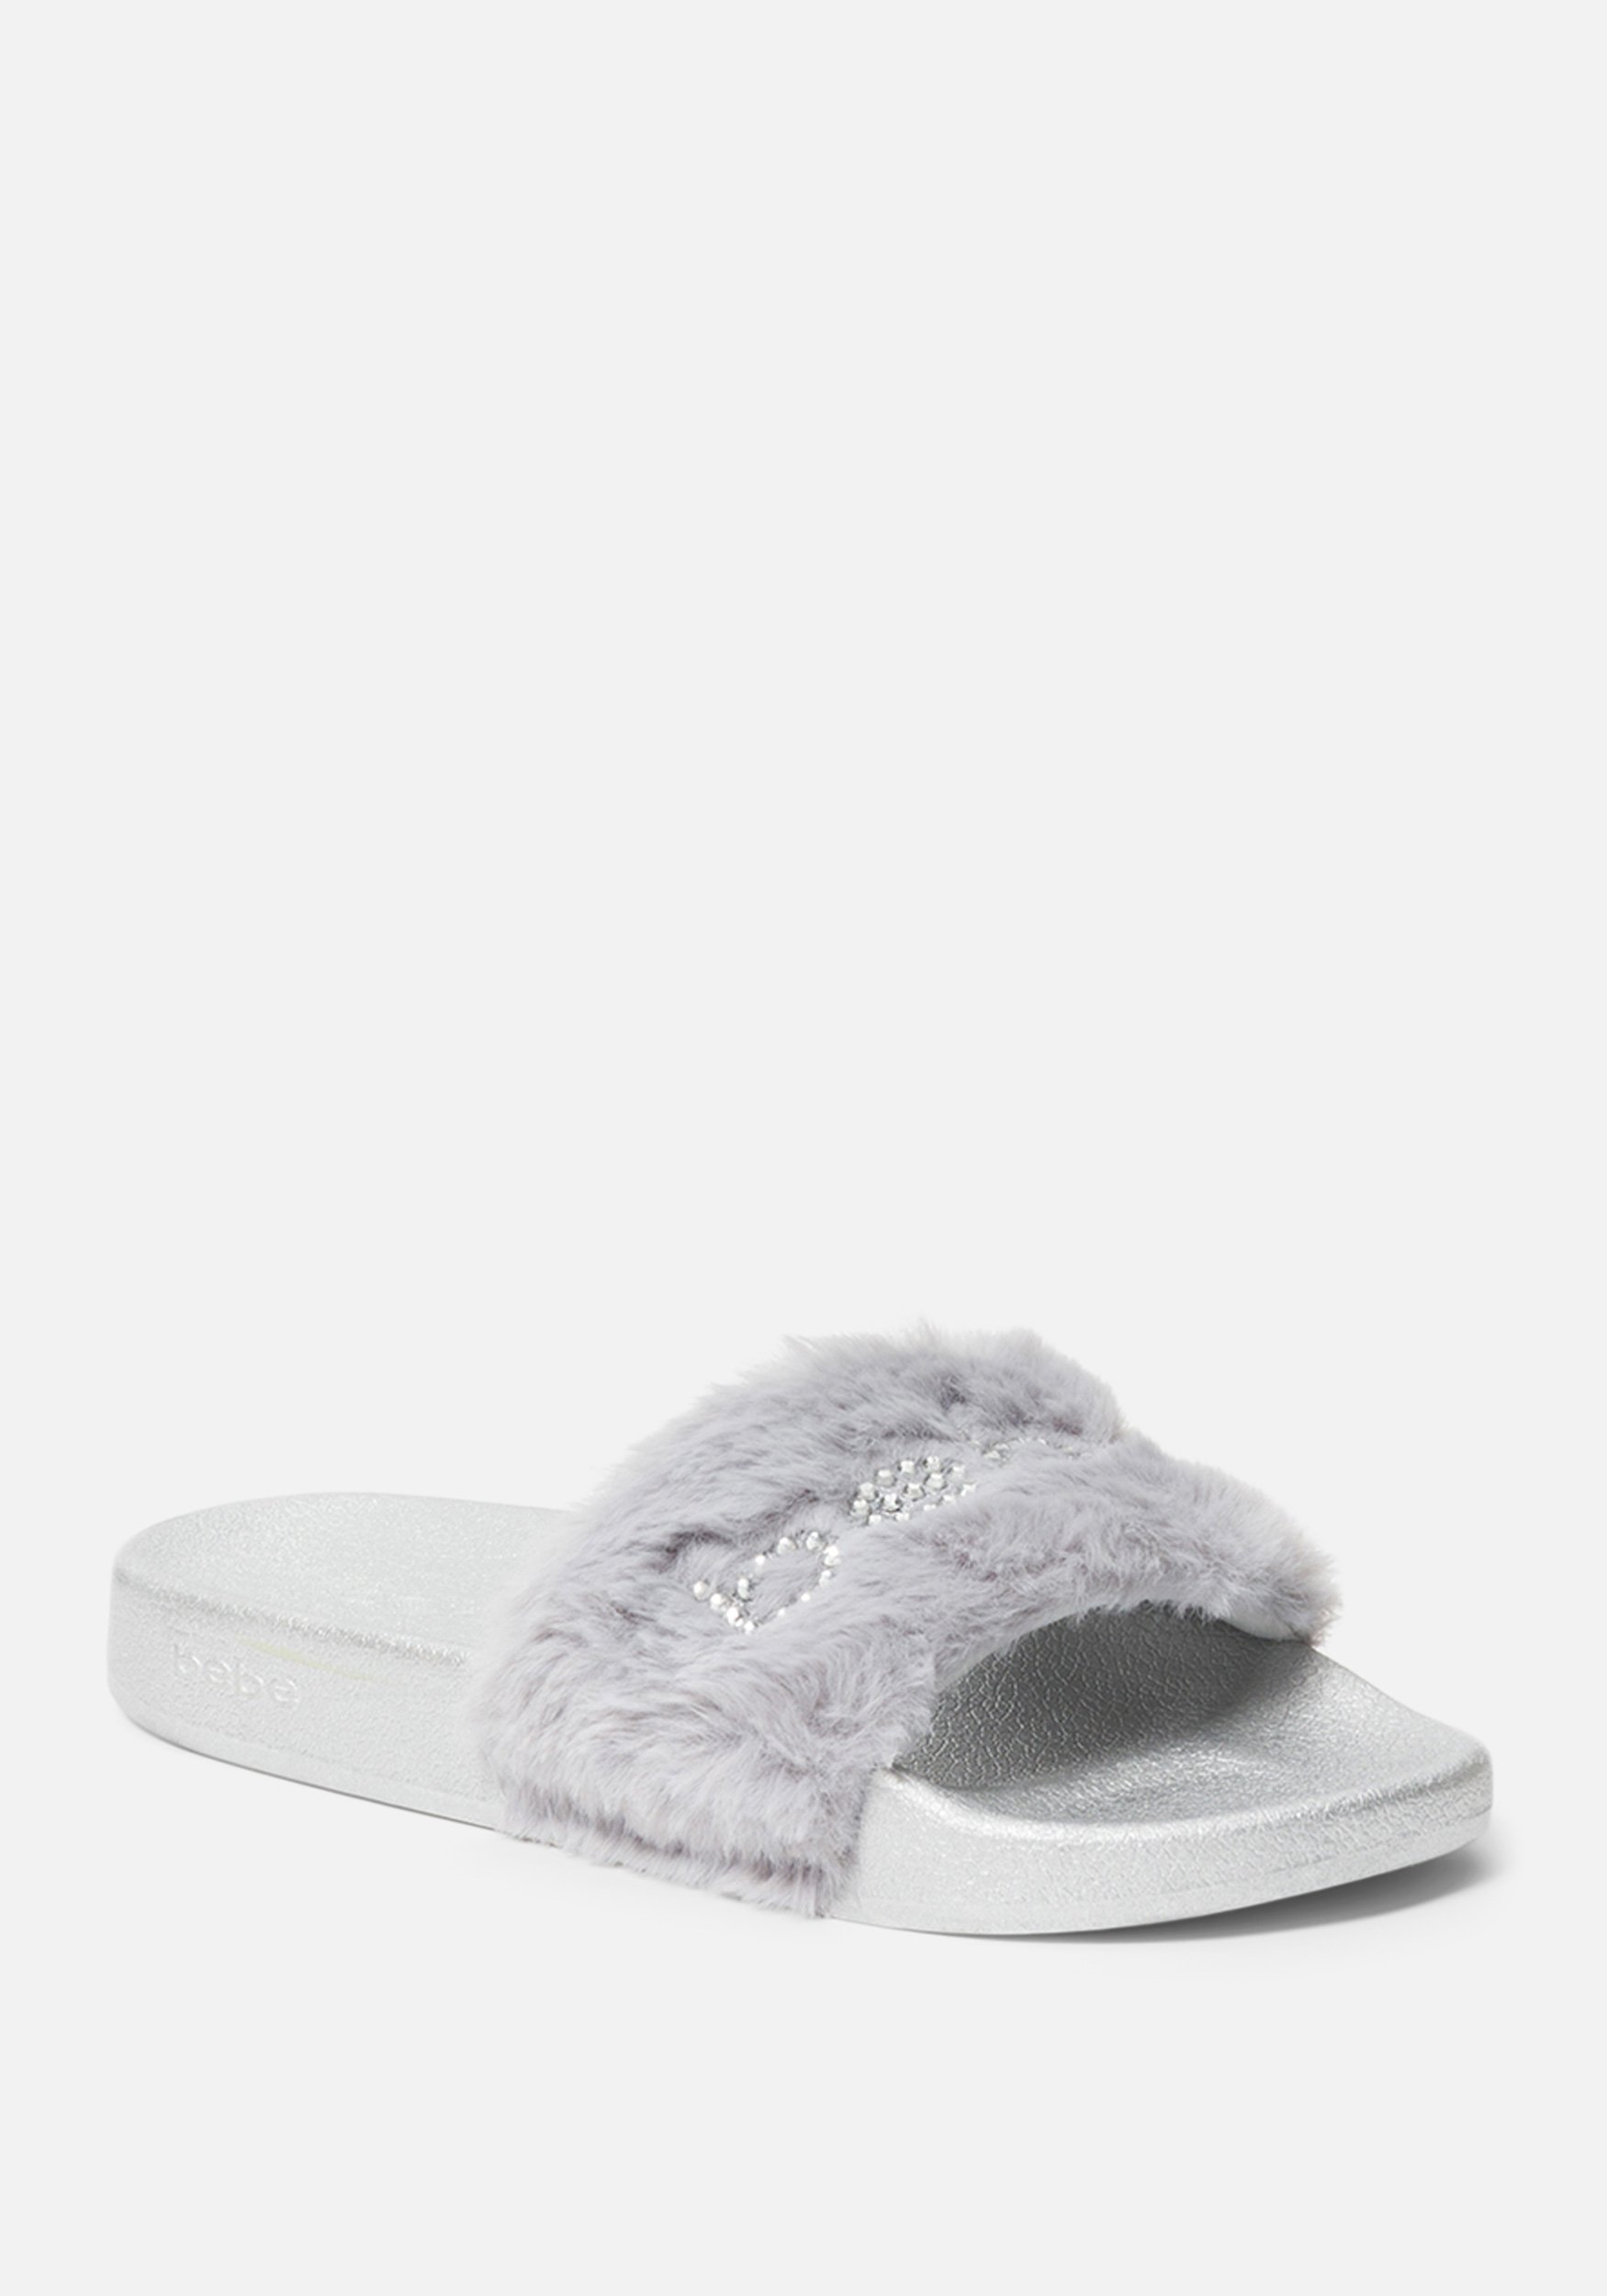 Bebe Women's Furiosa Faux Fur Slides Shoe, Size 8 in SILVER Synthetic